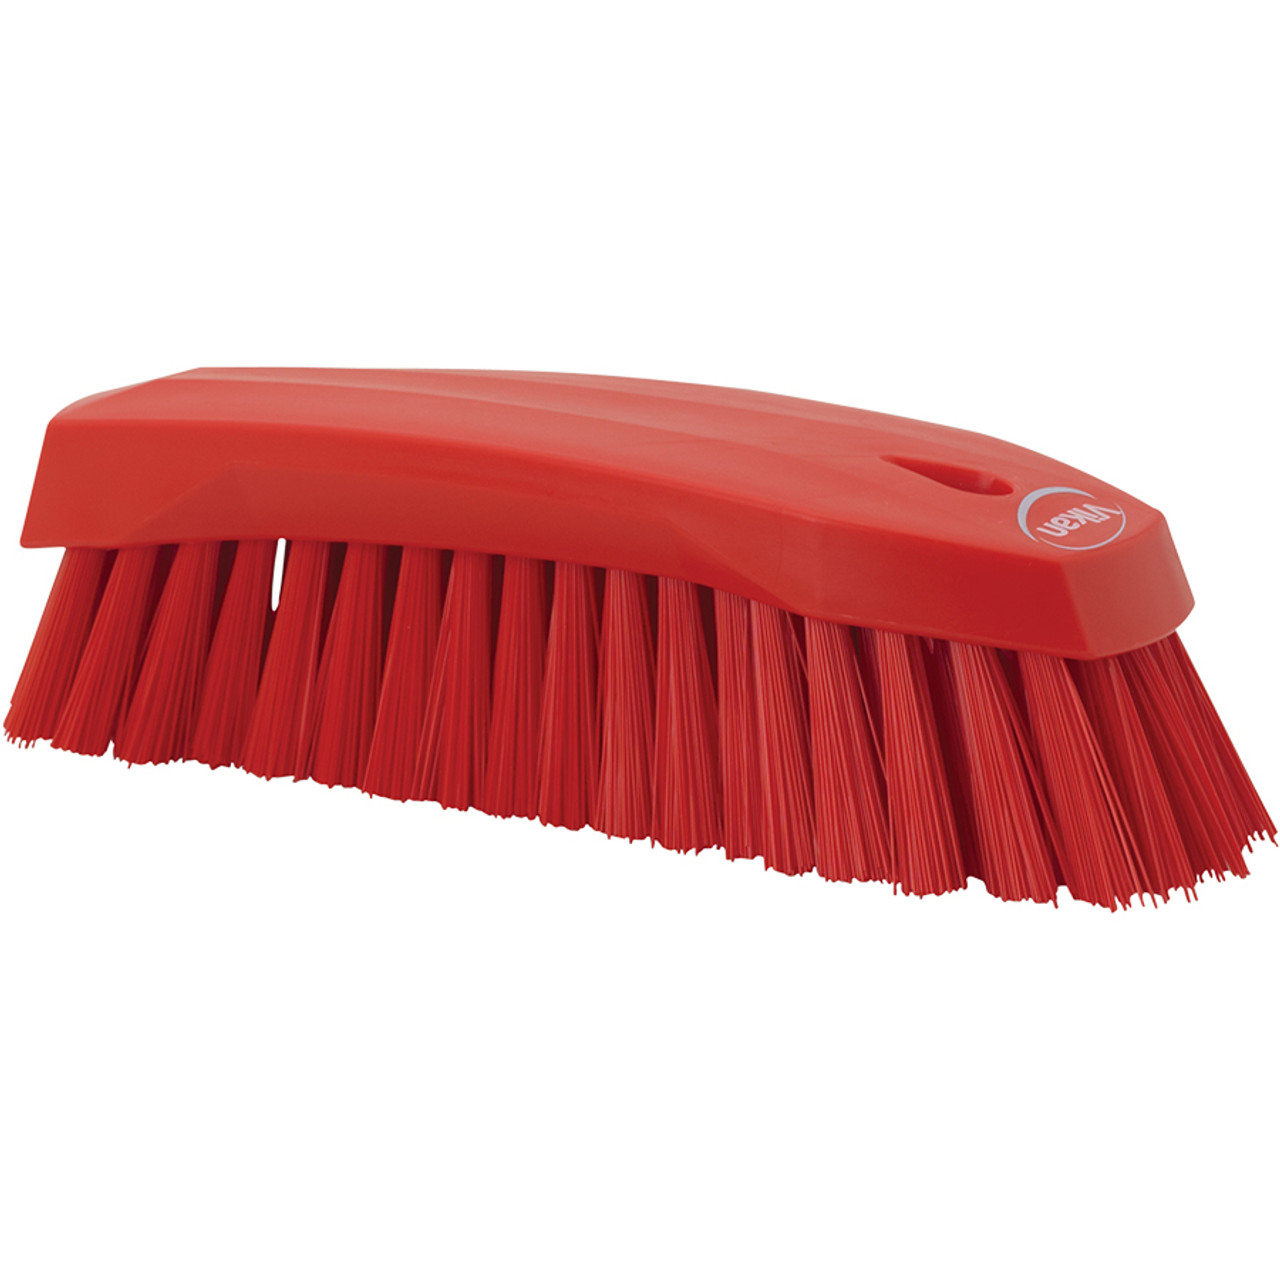 Remco Vikan Long Handle Scrubbing Brush:Facility Safety and Maintenance:Hand